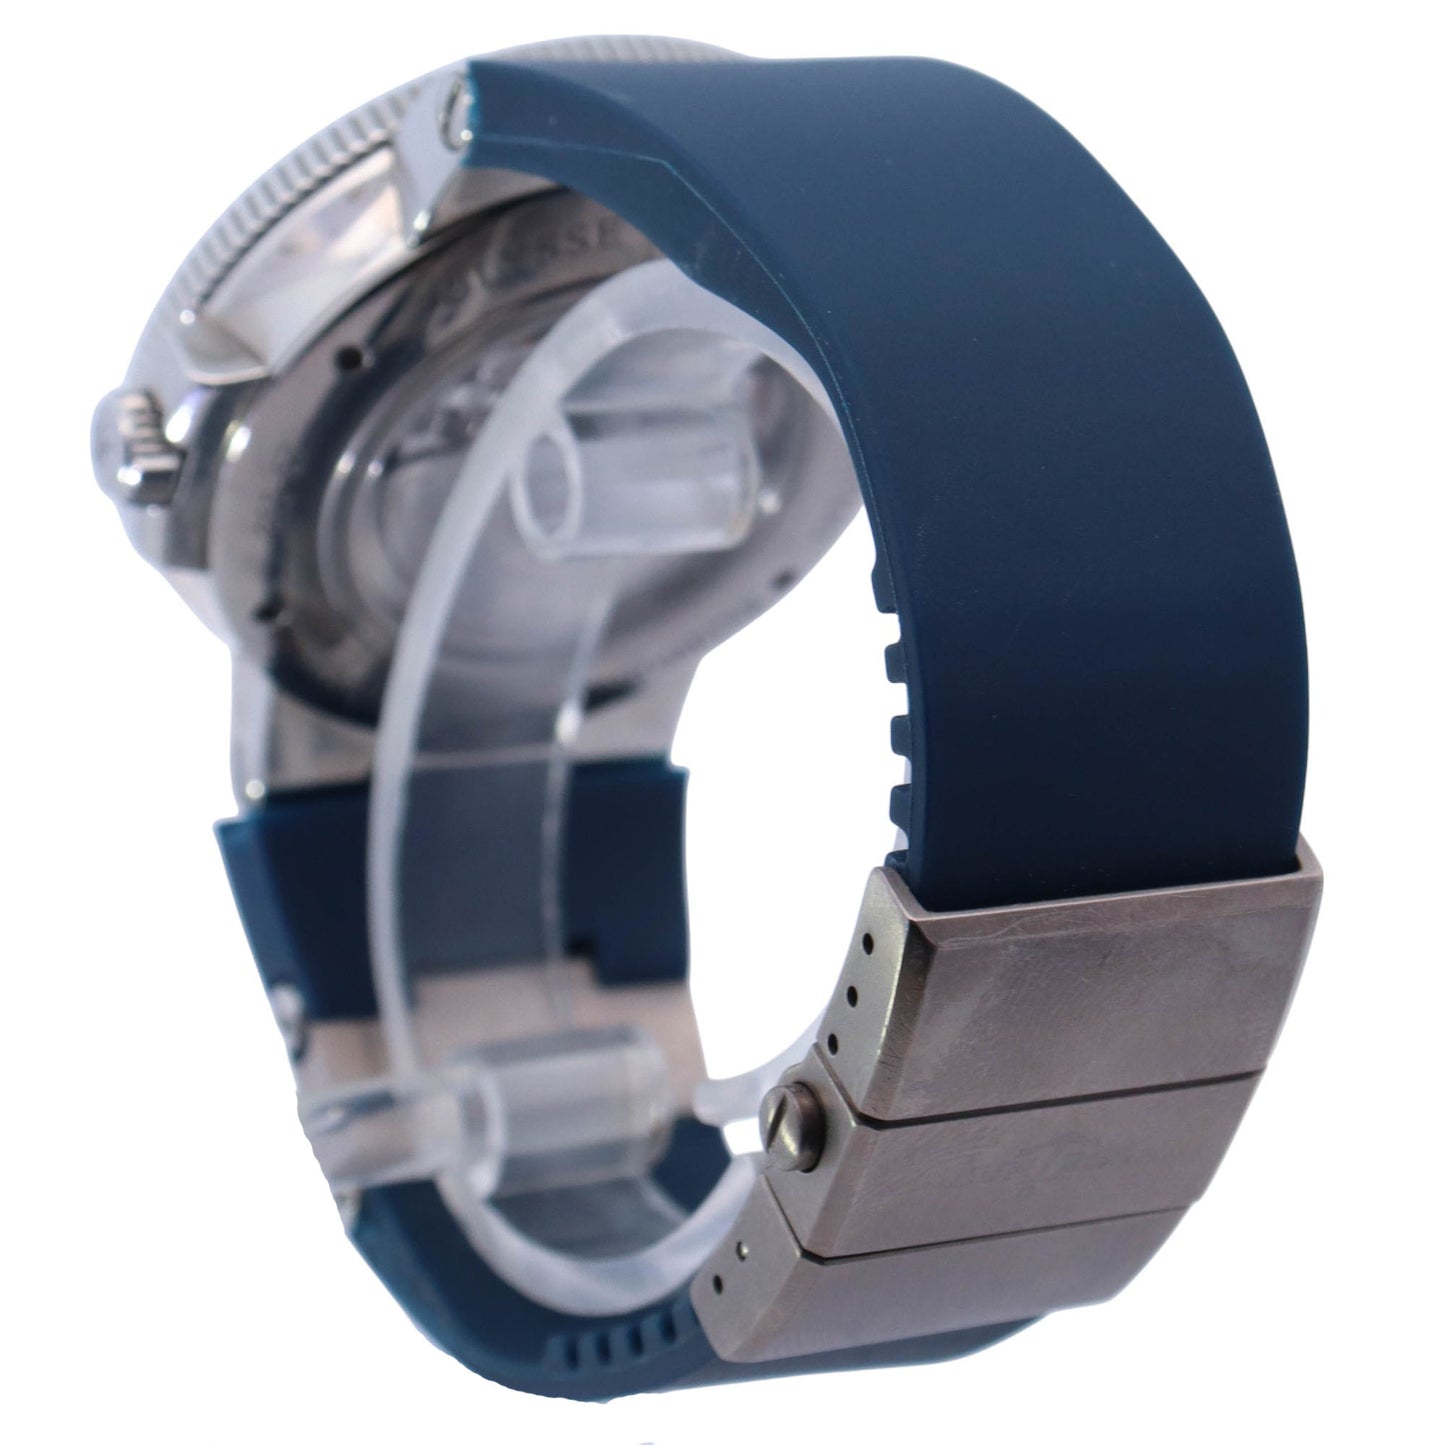 Ulysse Nardin Marine Chronometer Stainless Steel 43mm Blue Roman Dial Watch Reference# 263.67.3.43 - Happy Jewelers Fine Jewelry Lifetime Warranty